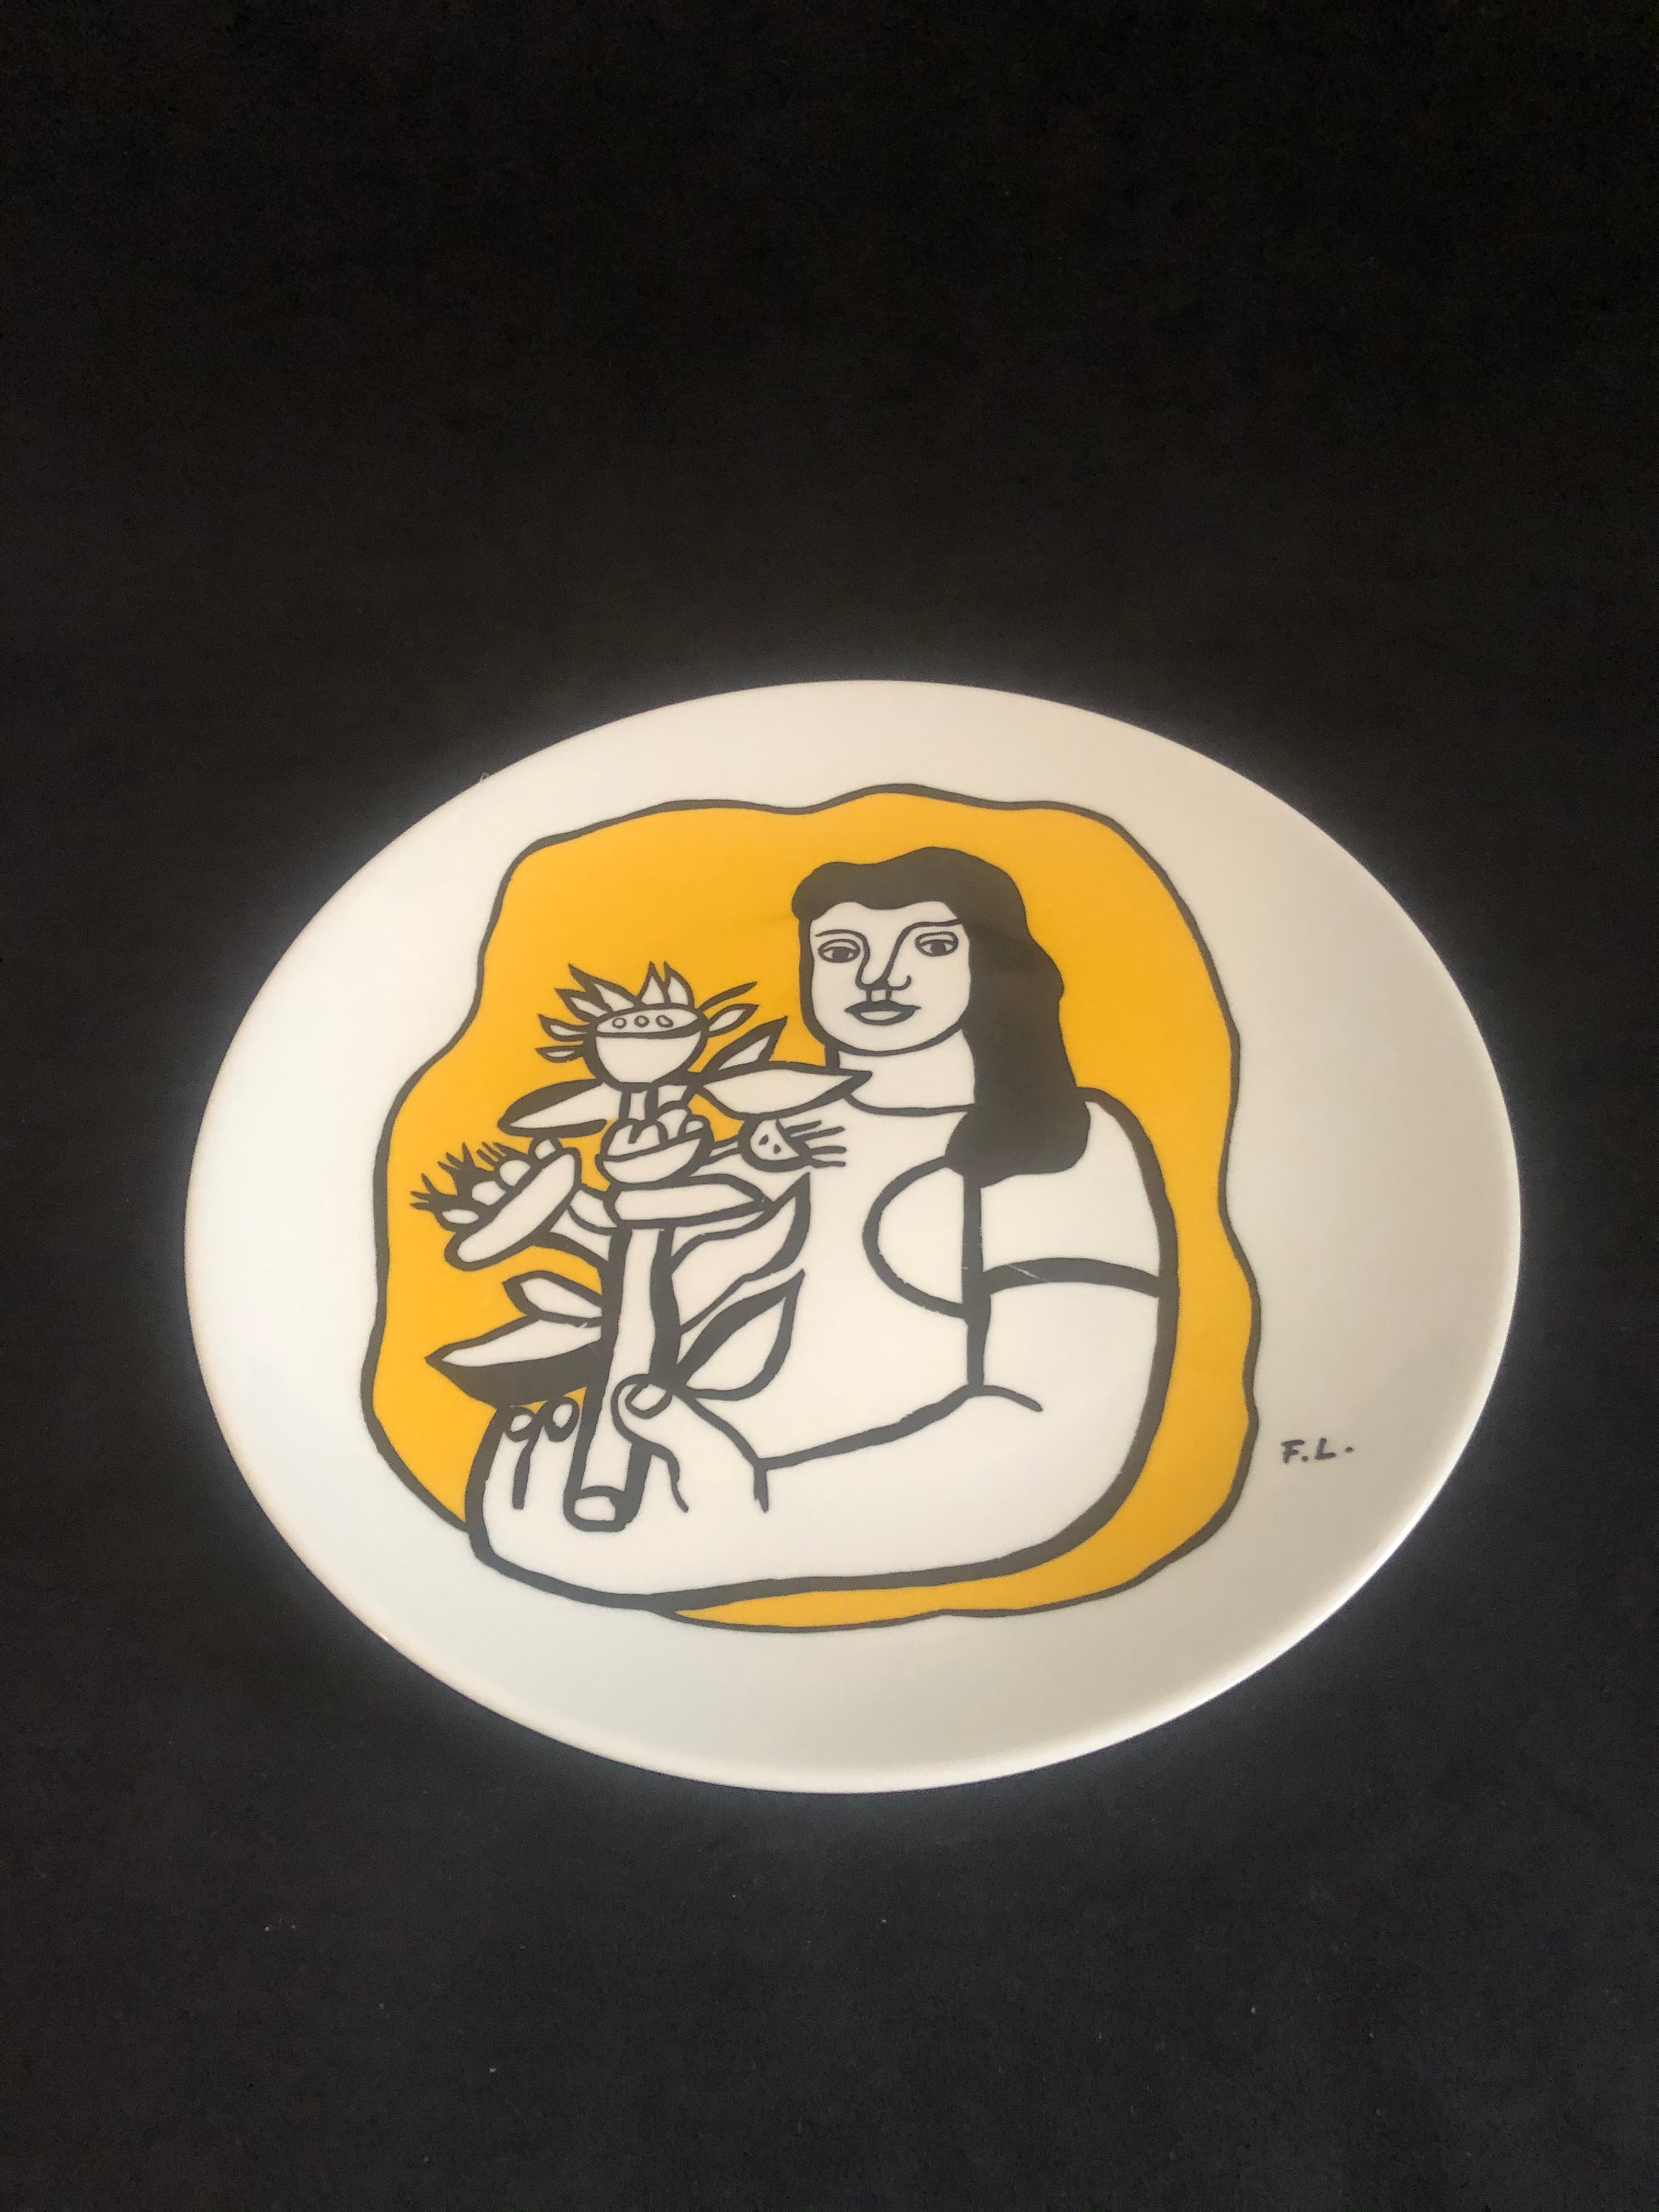 Fernand Léger, Circa 1970s Porcelaine Chauvigny ceramic decorative plate. 

Editions S.E.A.L / Exclusivité / Musée F. Leger / Biot

Ceramic decorative plate produced by Musée national Fernand Léger.

Musée national Fernand Léger, is a French